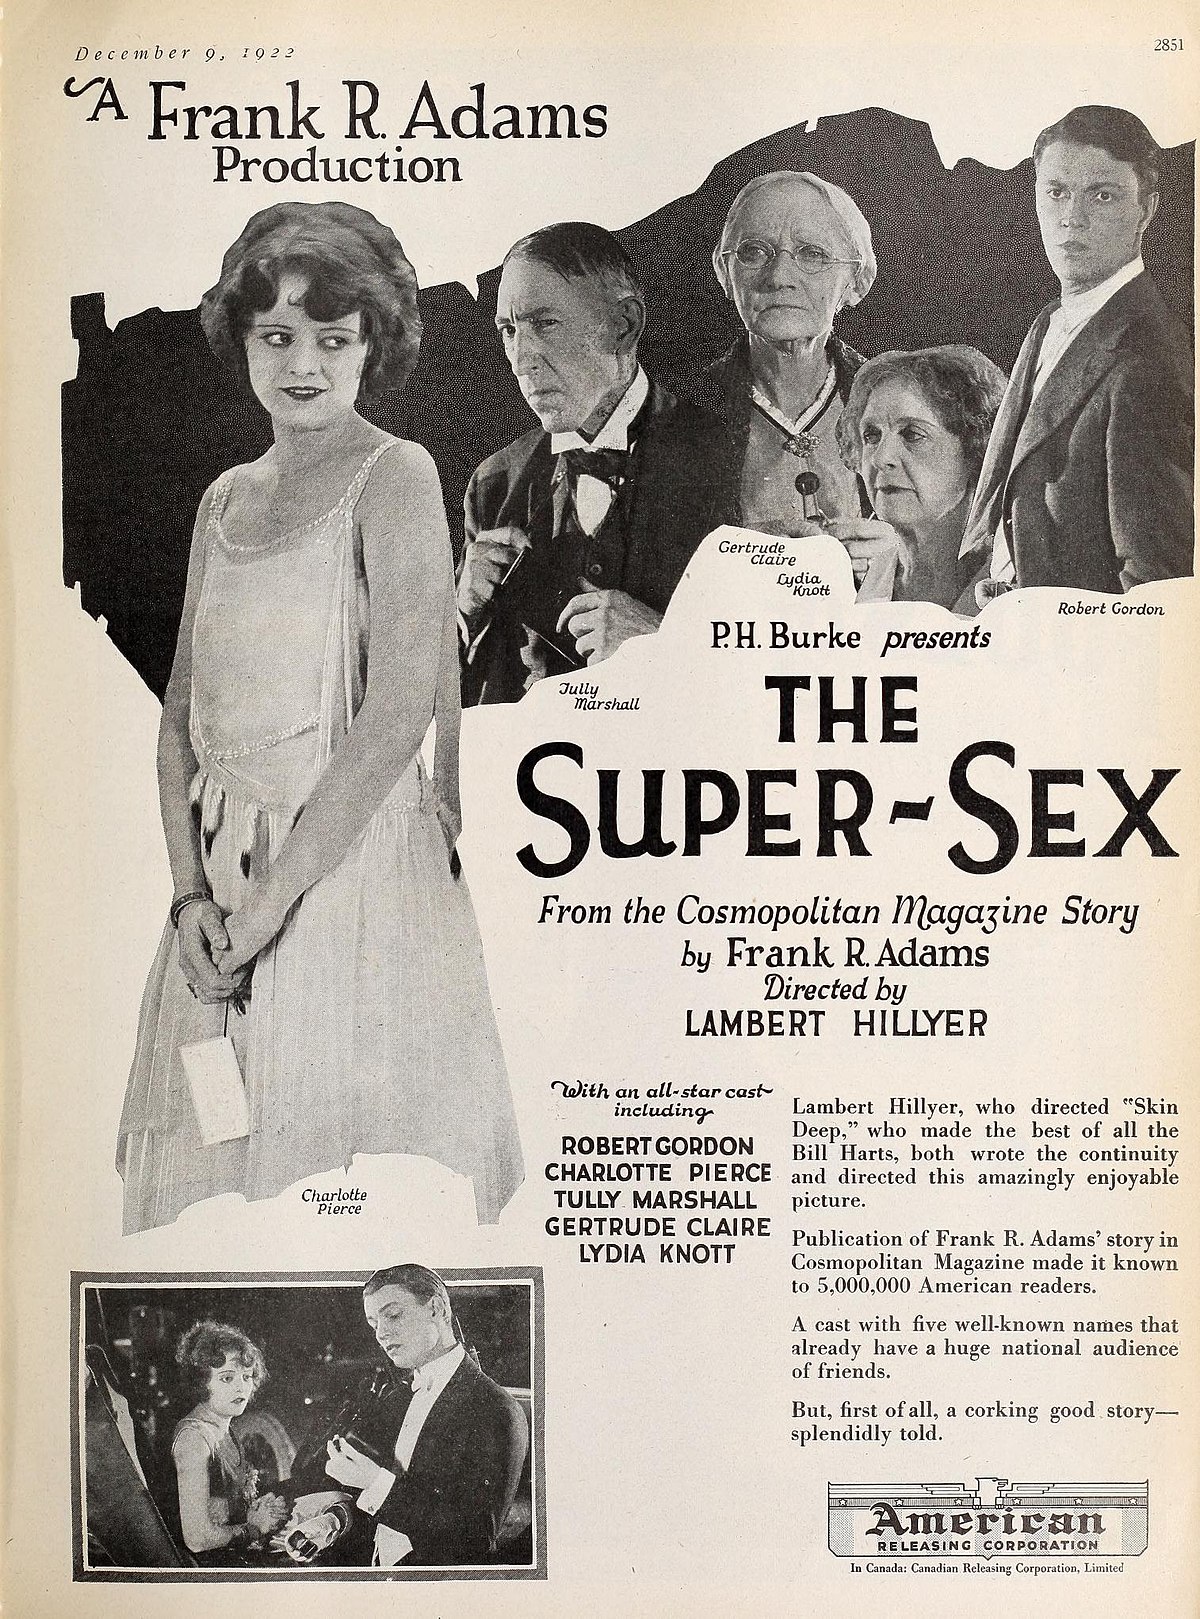 The Super-Sex